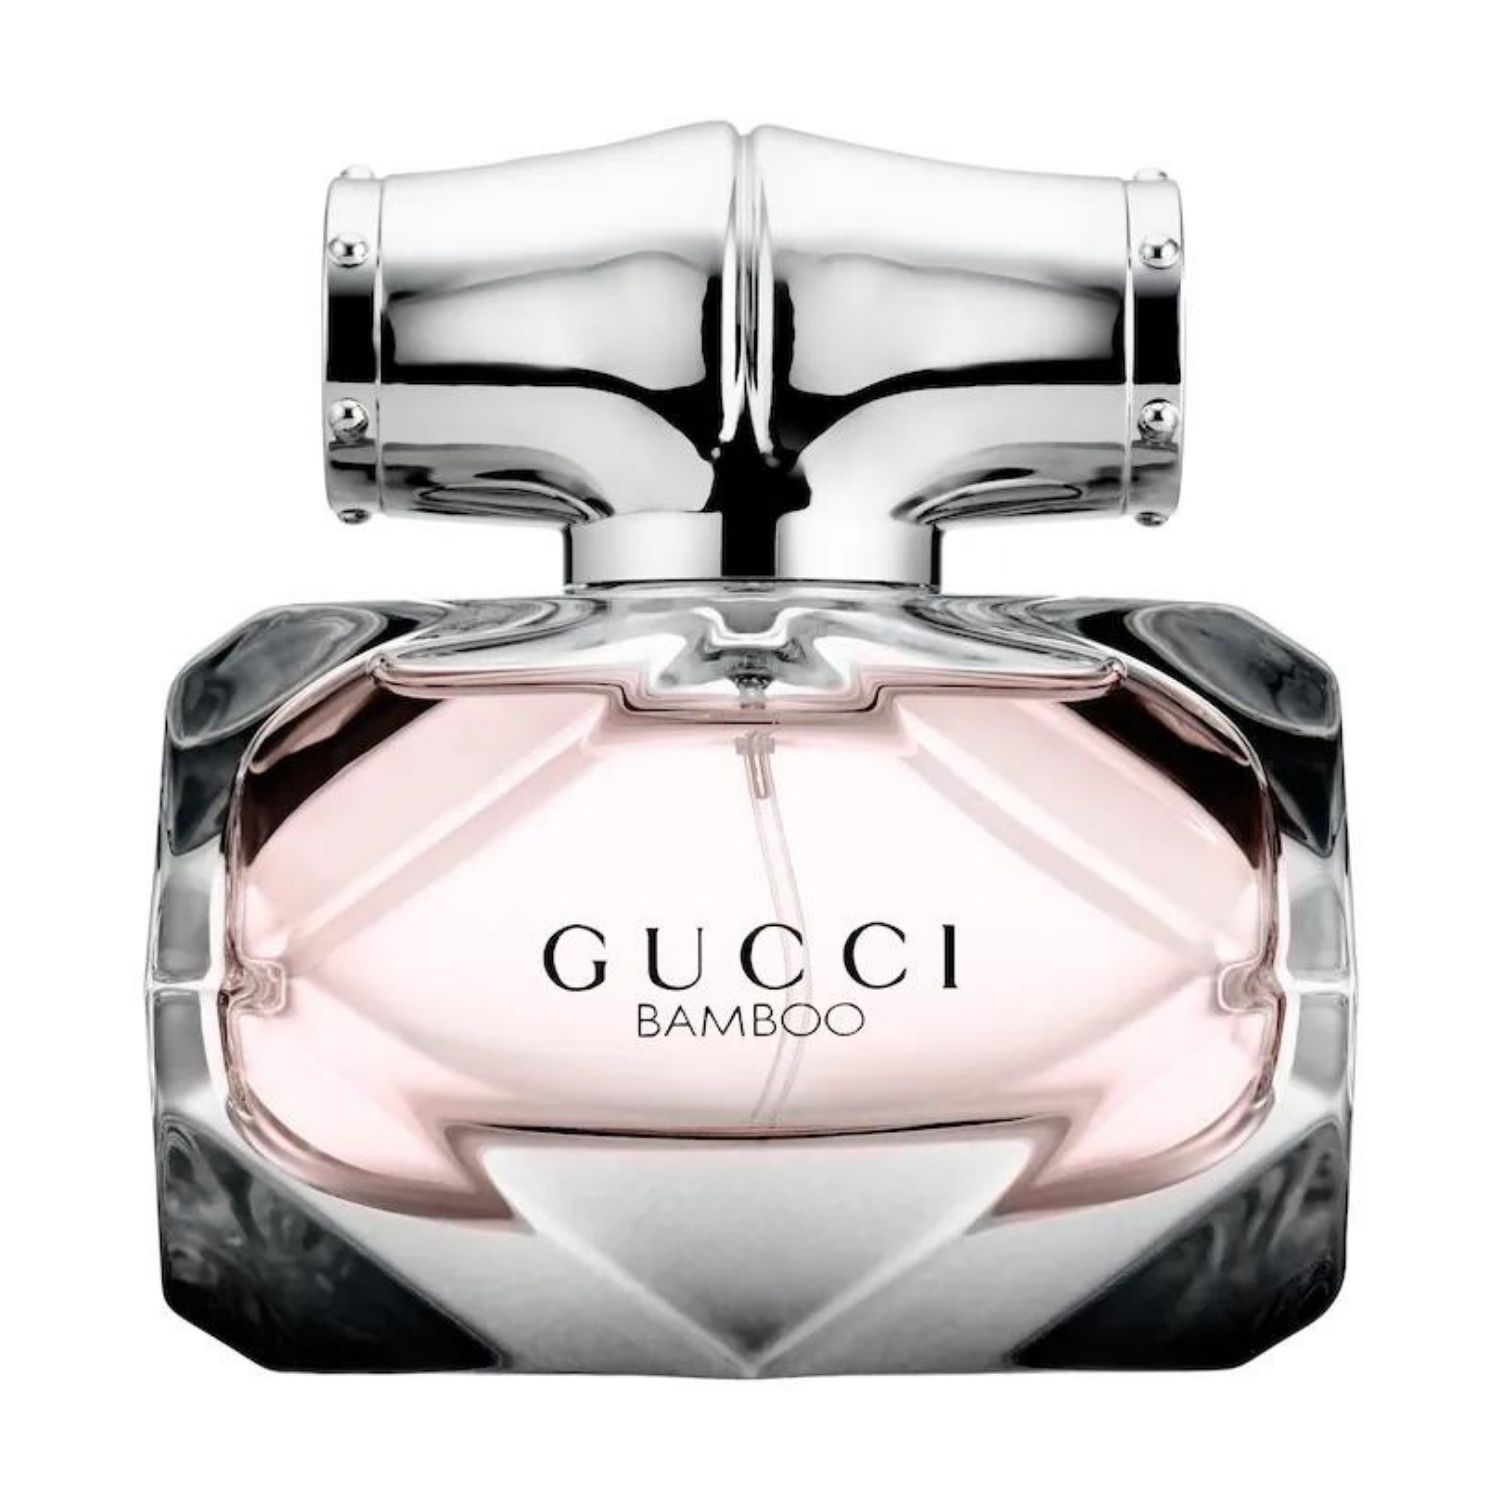 Gucci Bamboo Eau De Parfum Spray for Women 1.6 oz - image 1 of 6